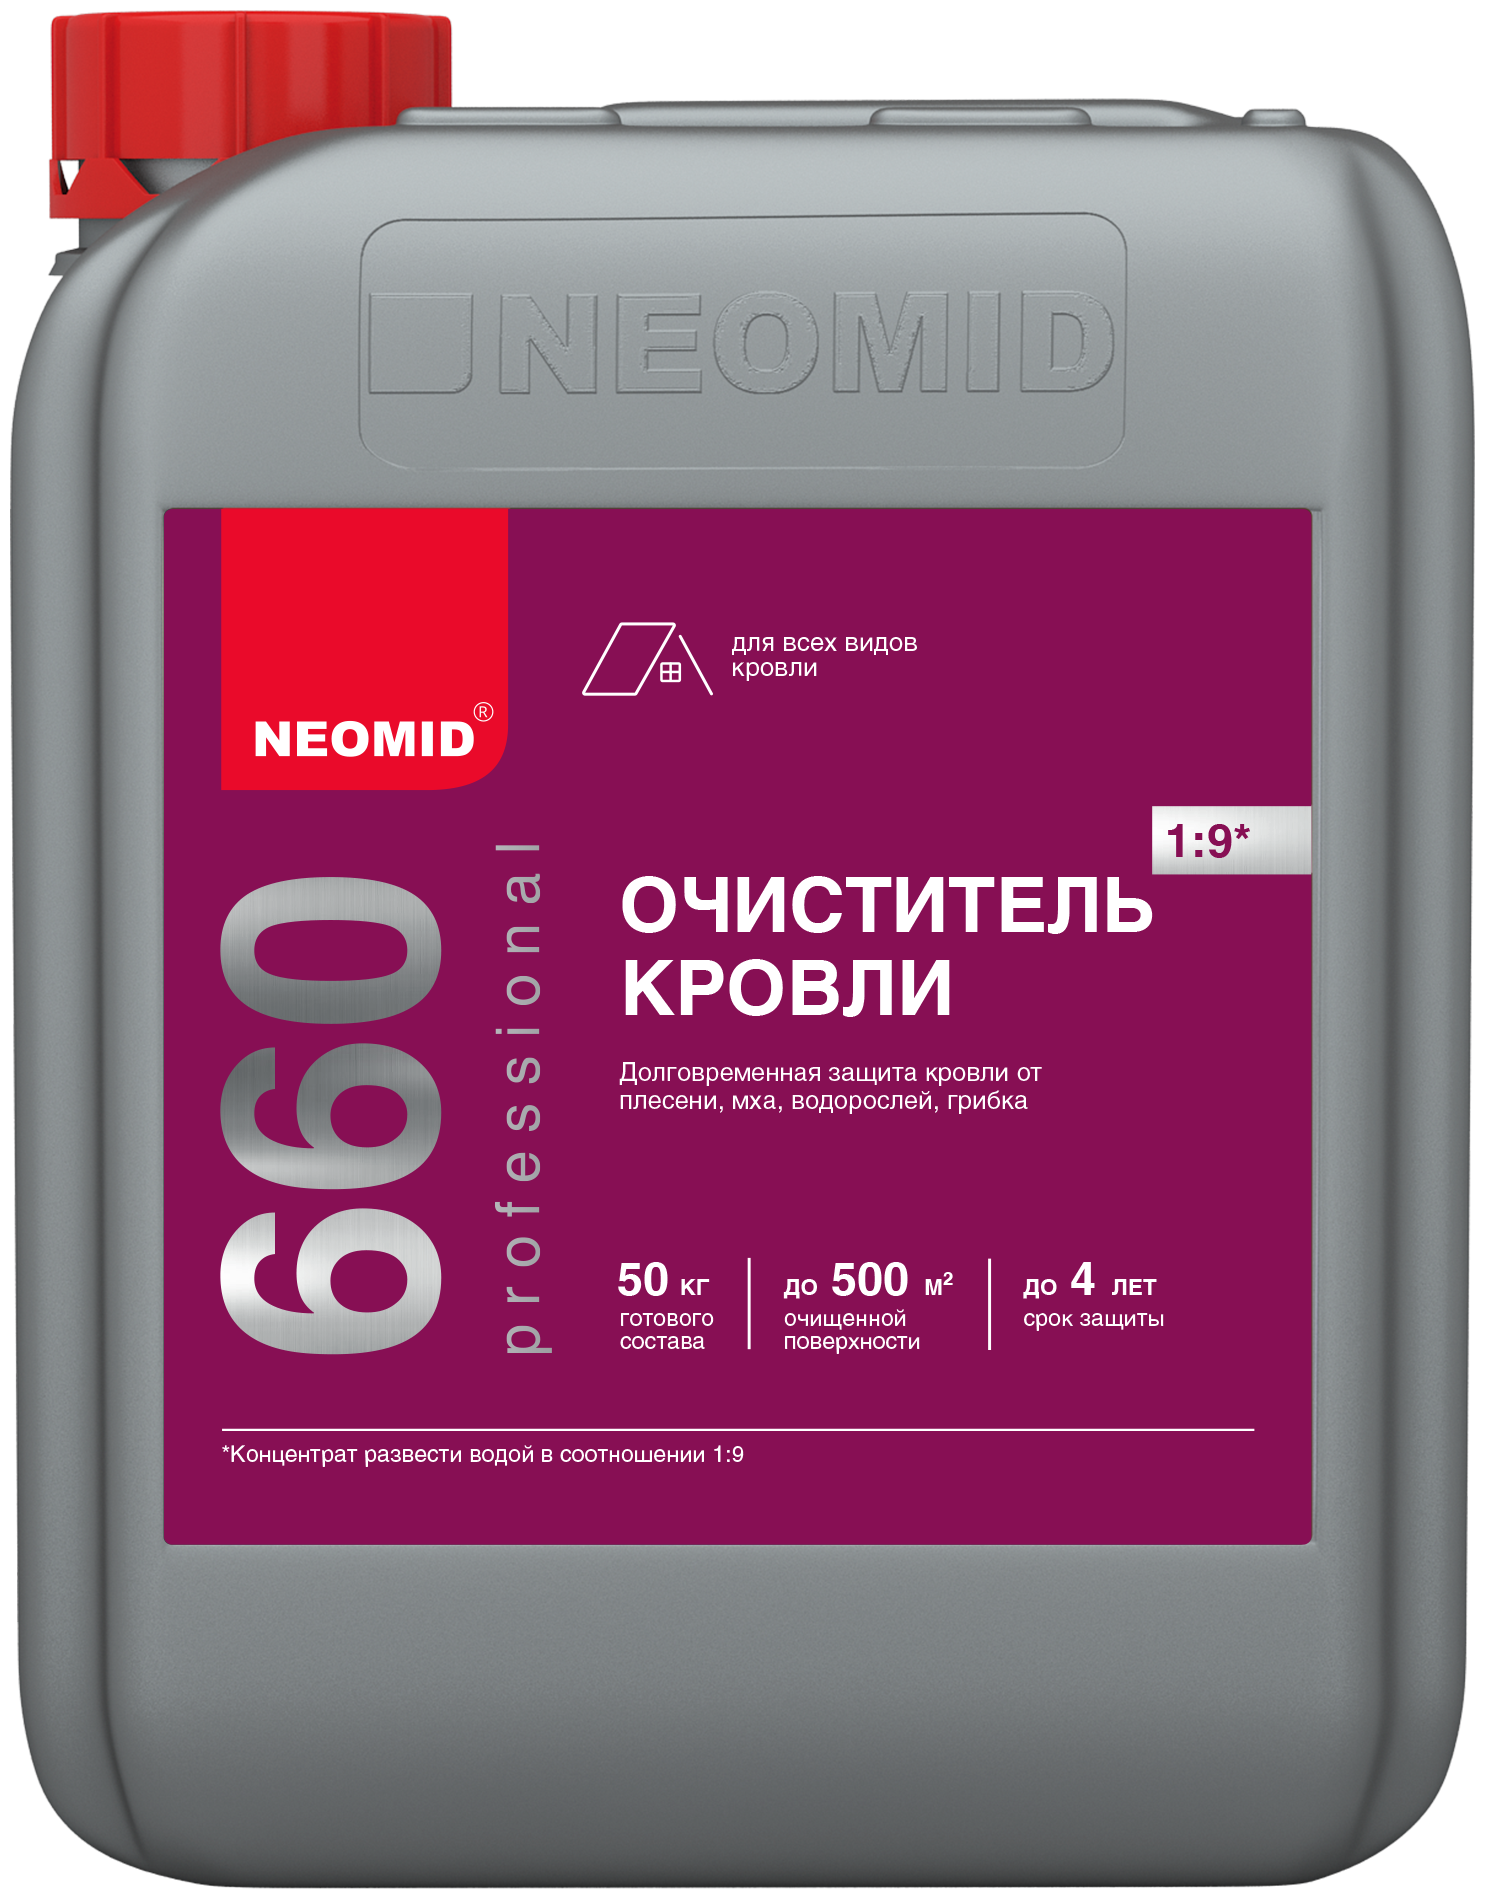 Неомид 660 Cleaning ( 1 кг) - моющее средство для кровли